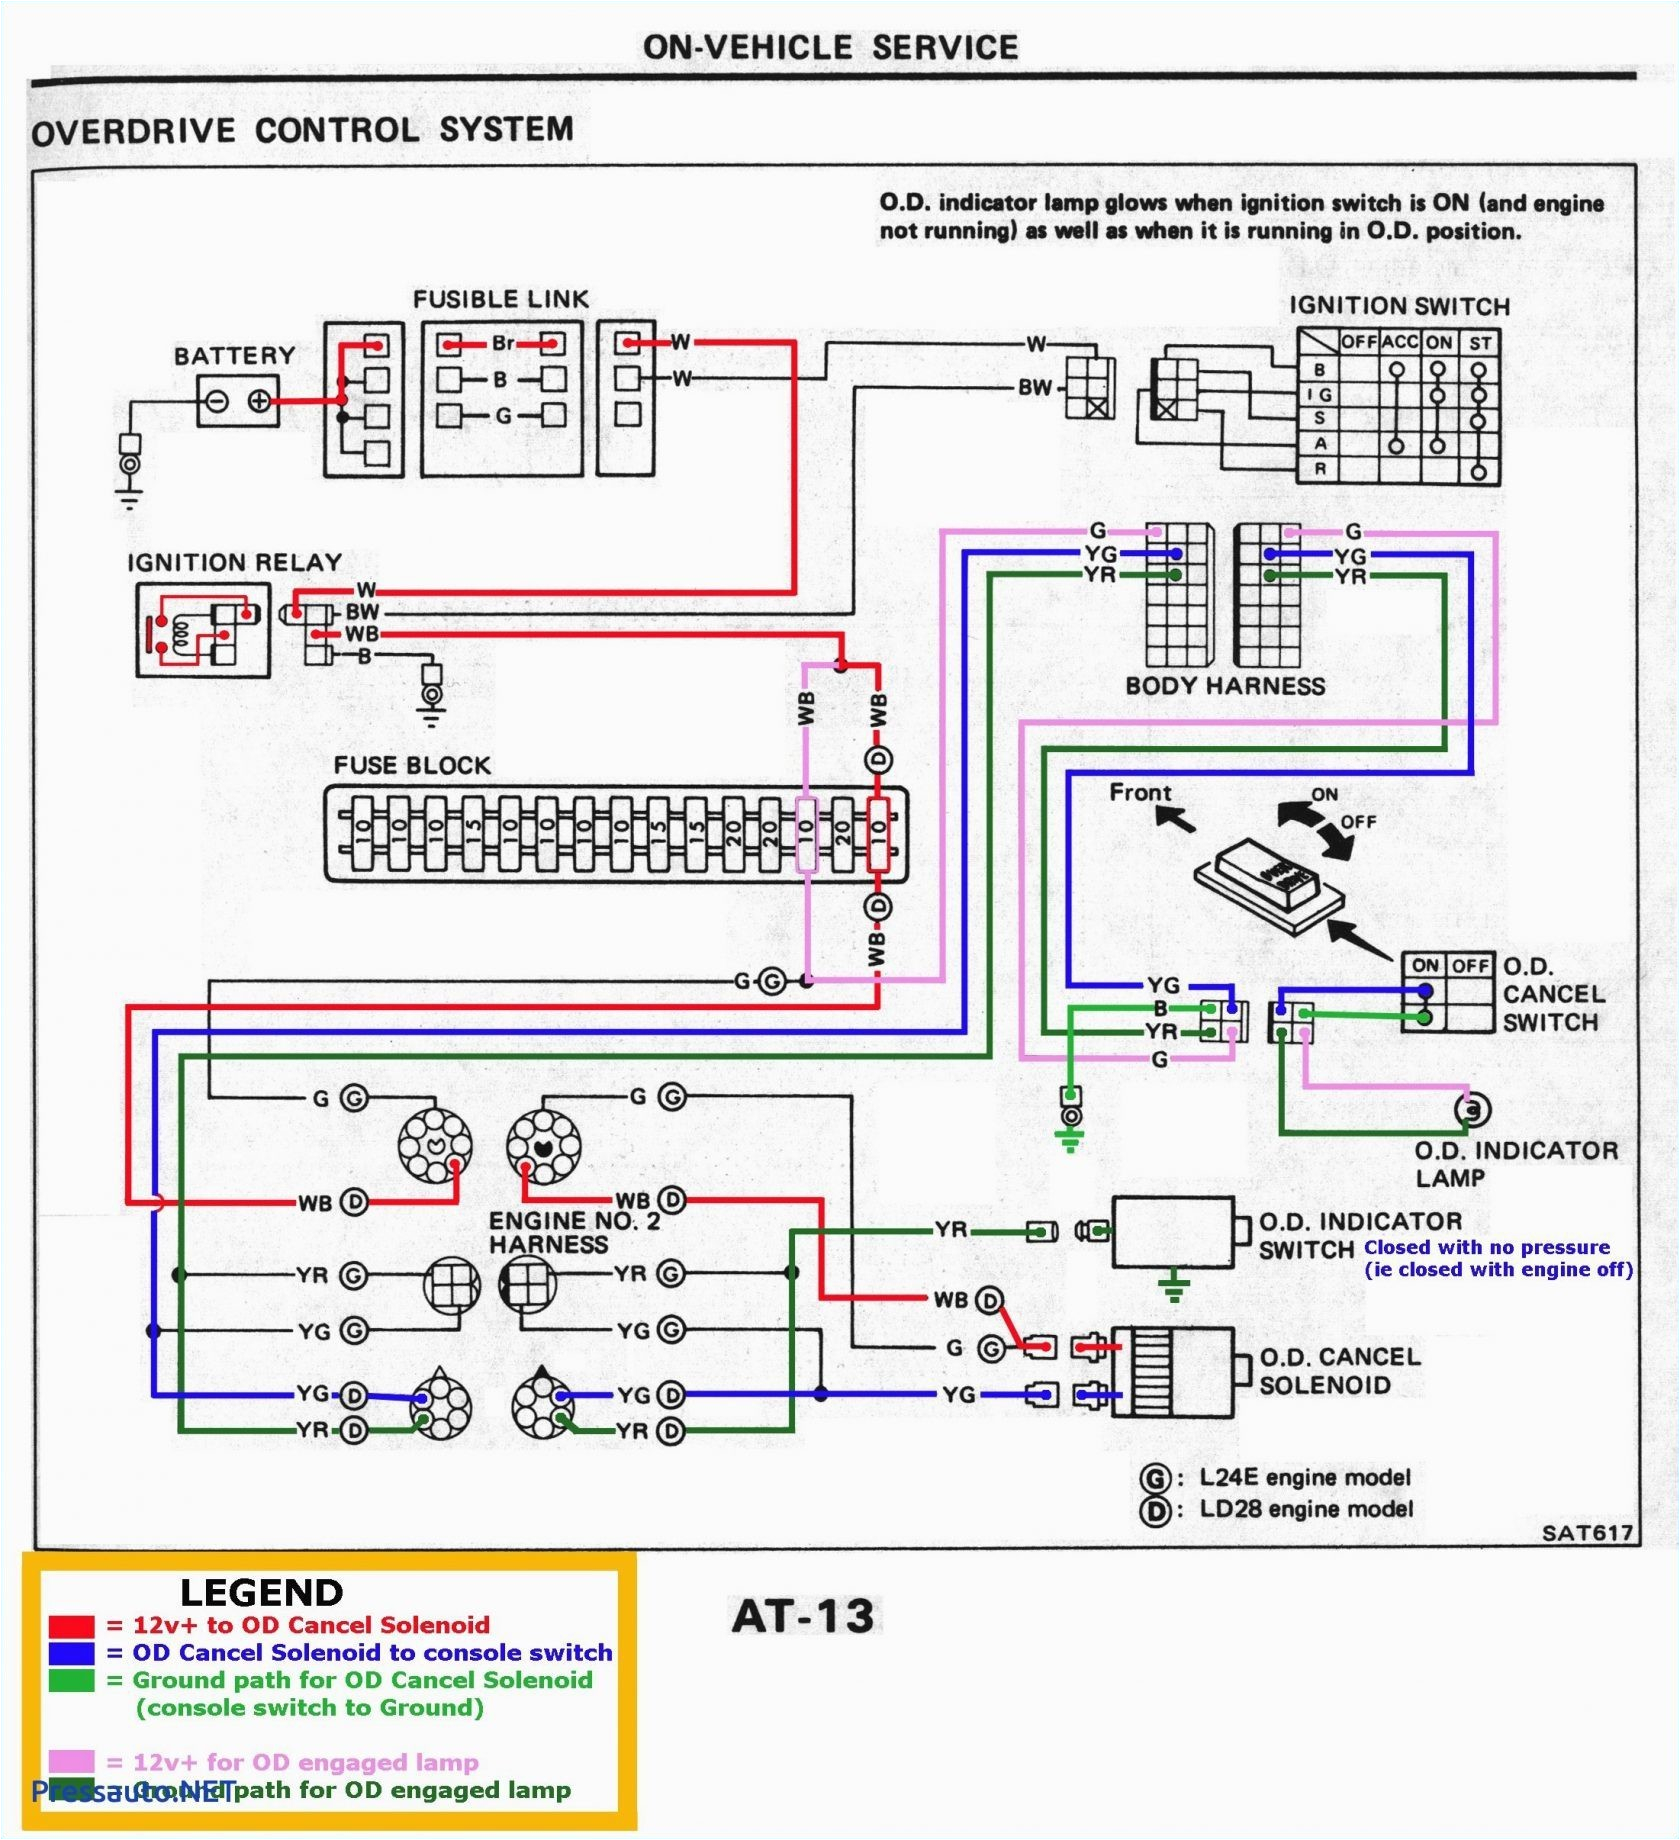 95 e4od wiring diagram sel wiring diagram secrets 95 e4od wiring diagram sel